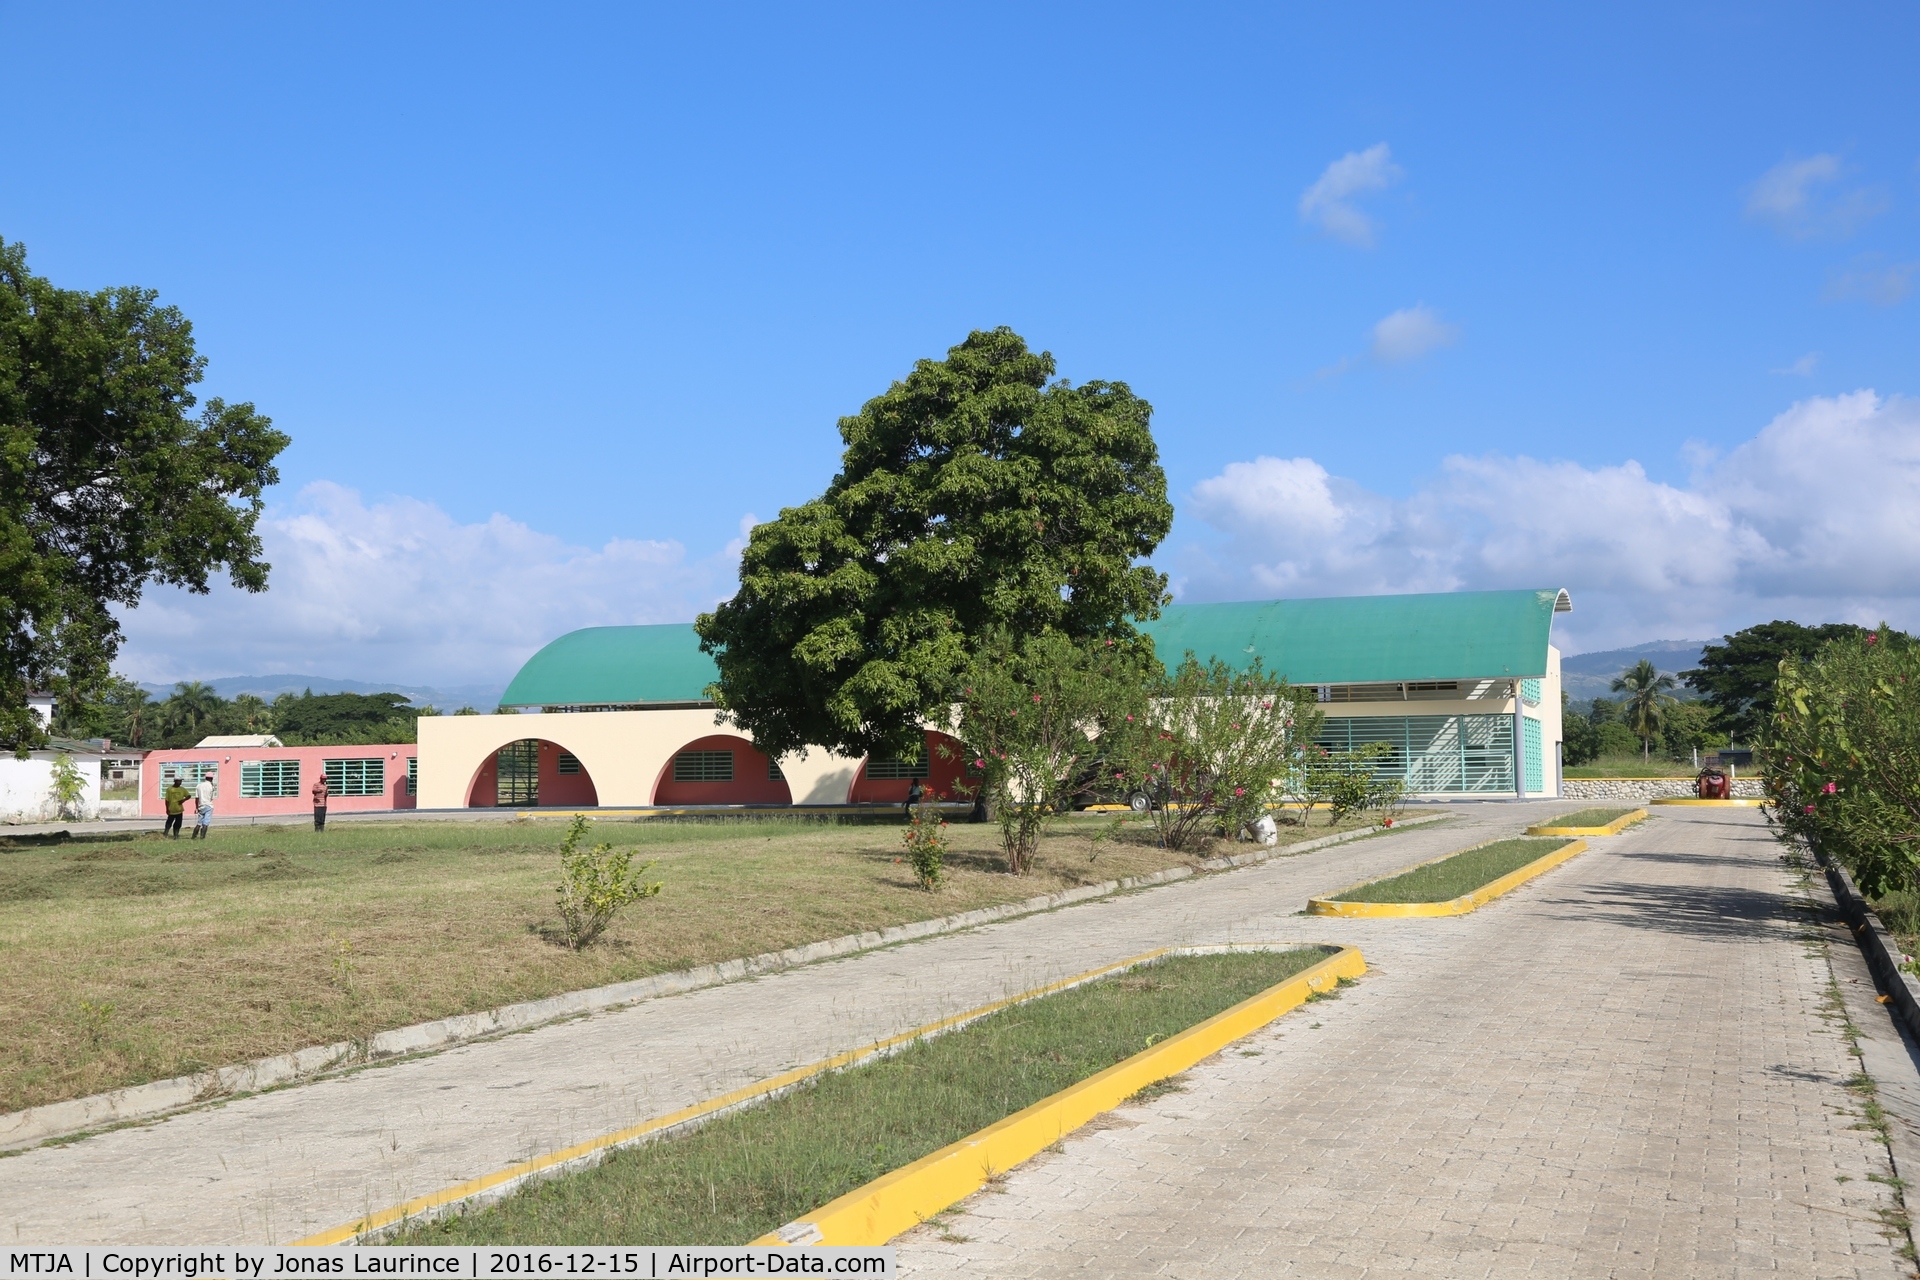 Jacmel Airport, Jacmel Haiti (MTJA) - Jacmel Airport Entrance